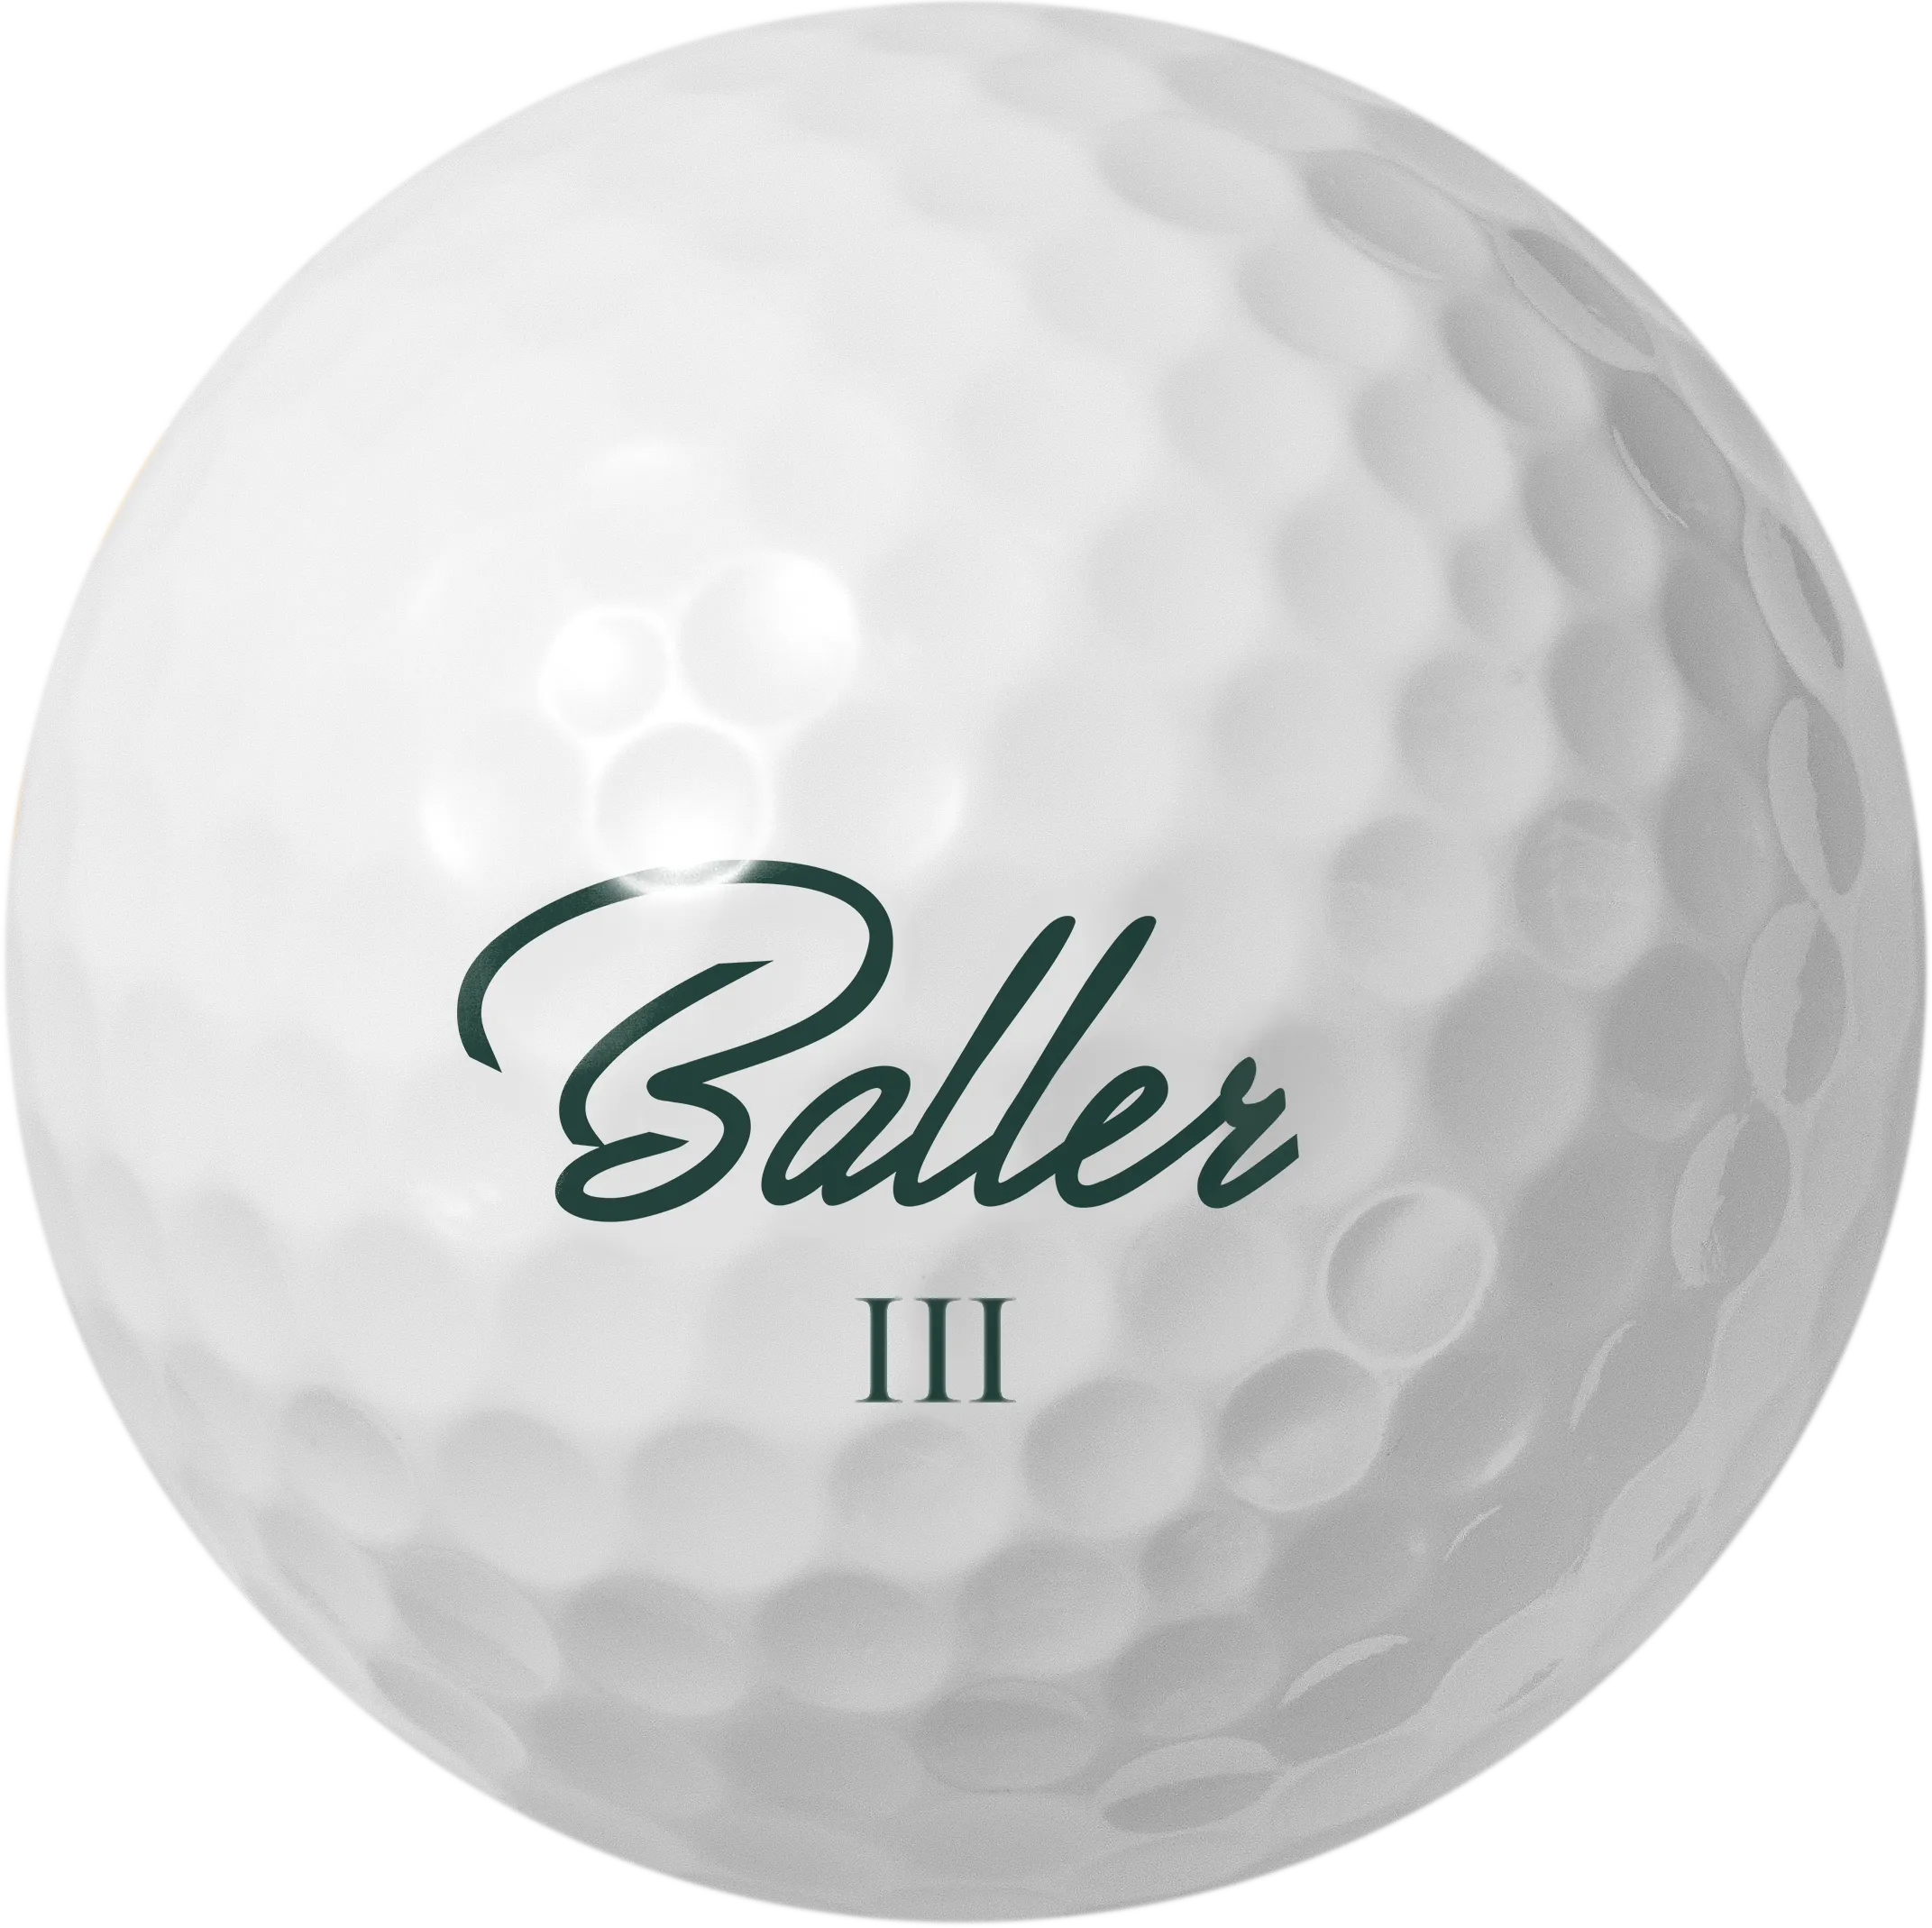 Baller SQUAD Golfbälle